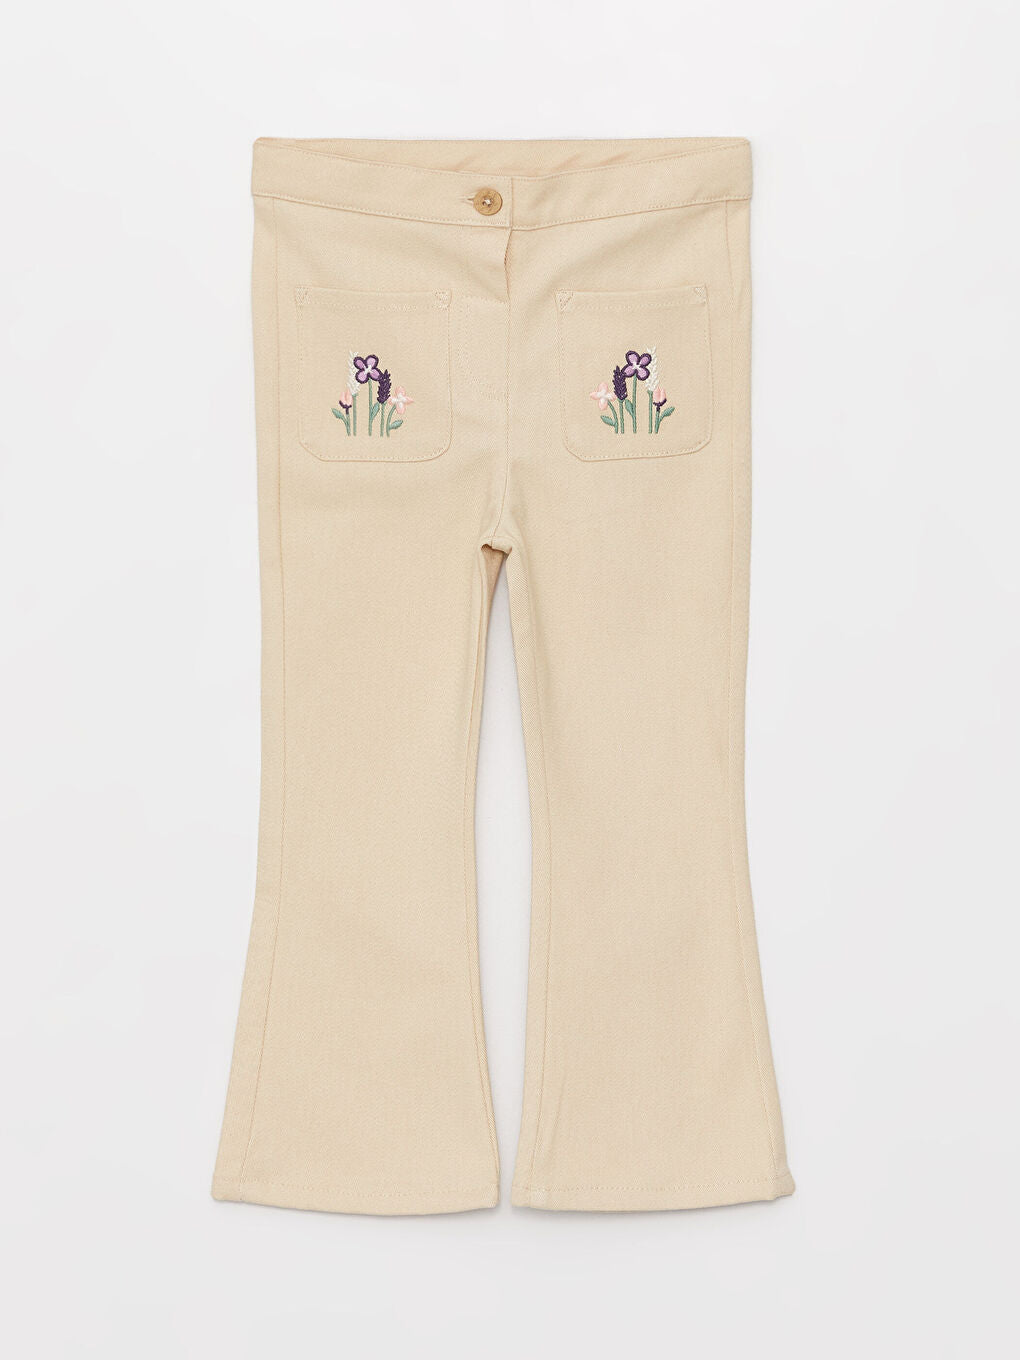 Embroidered Baby Girl Pants